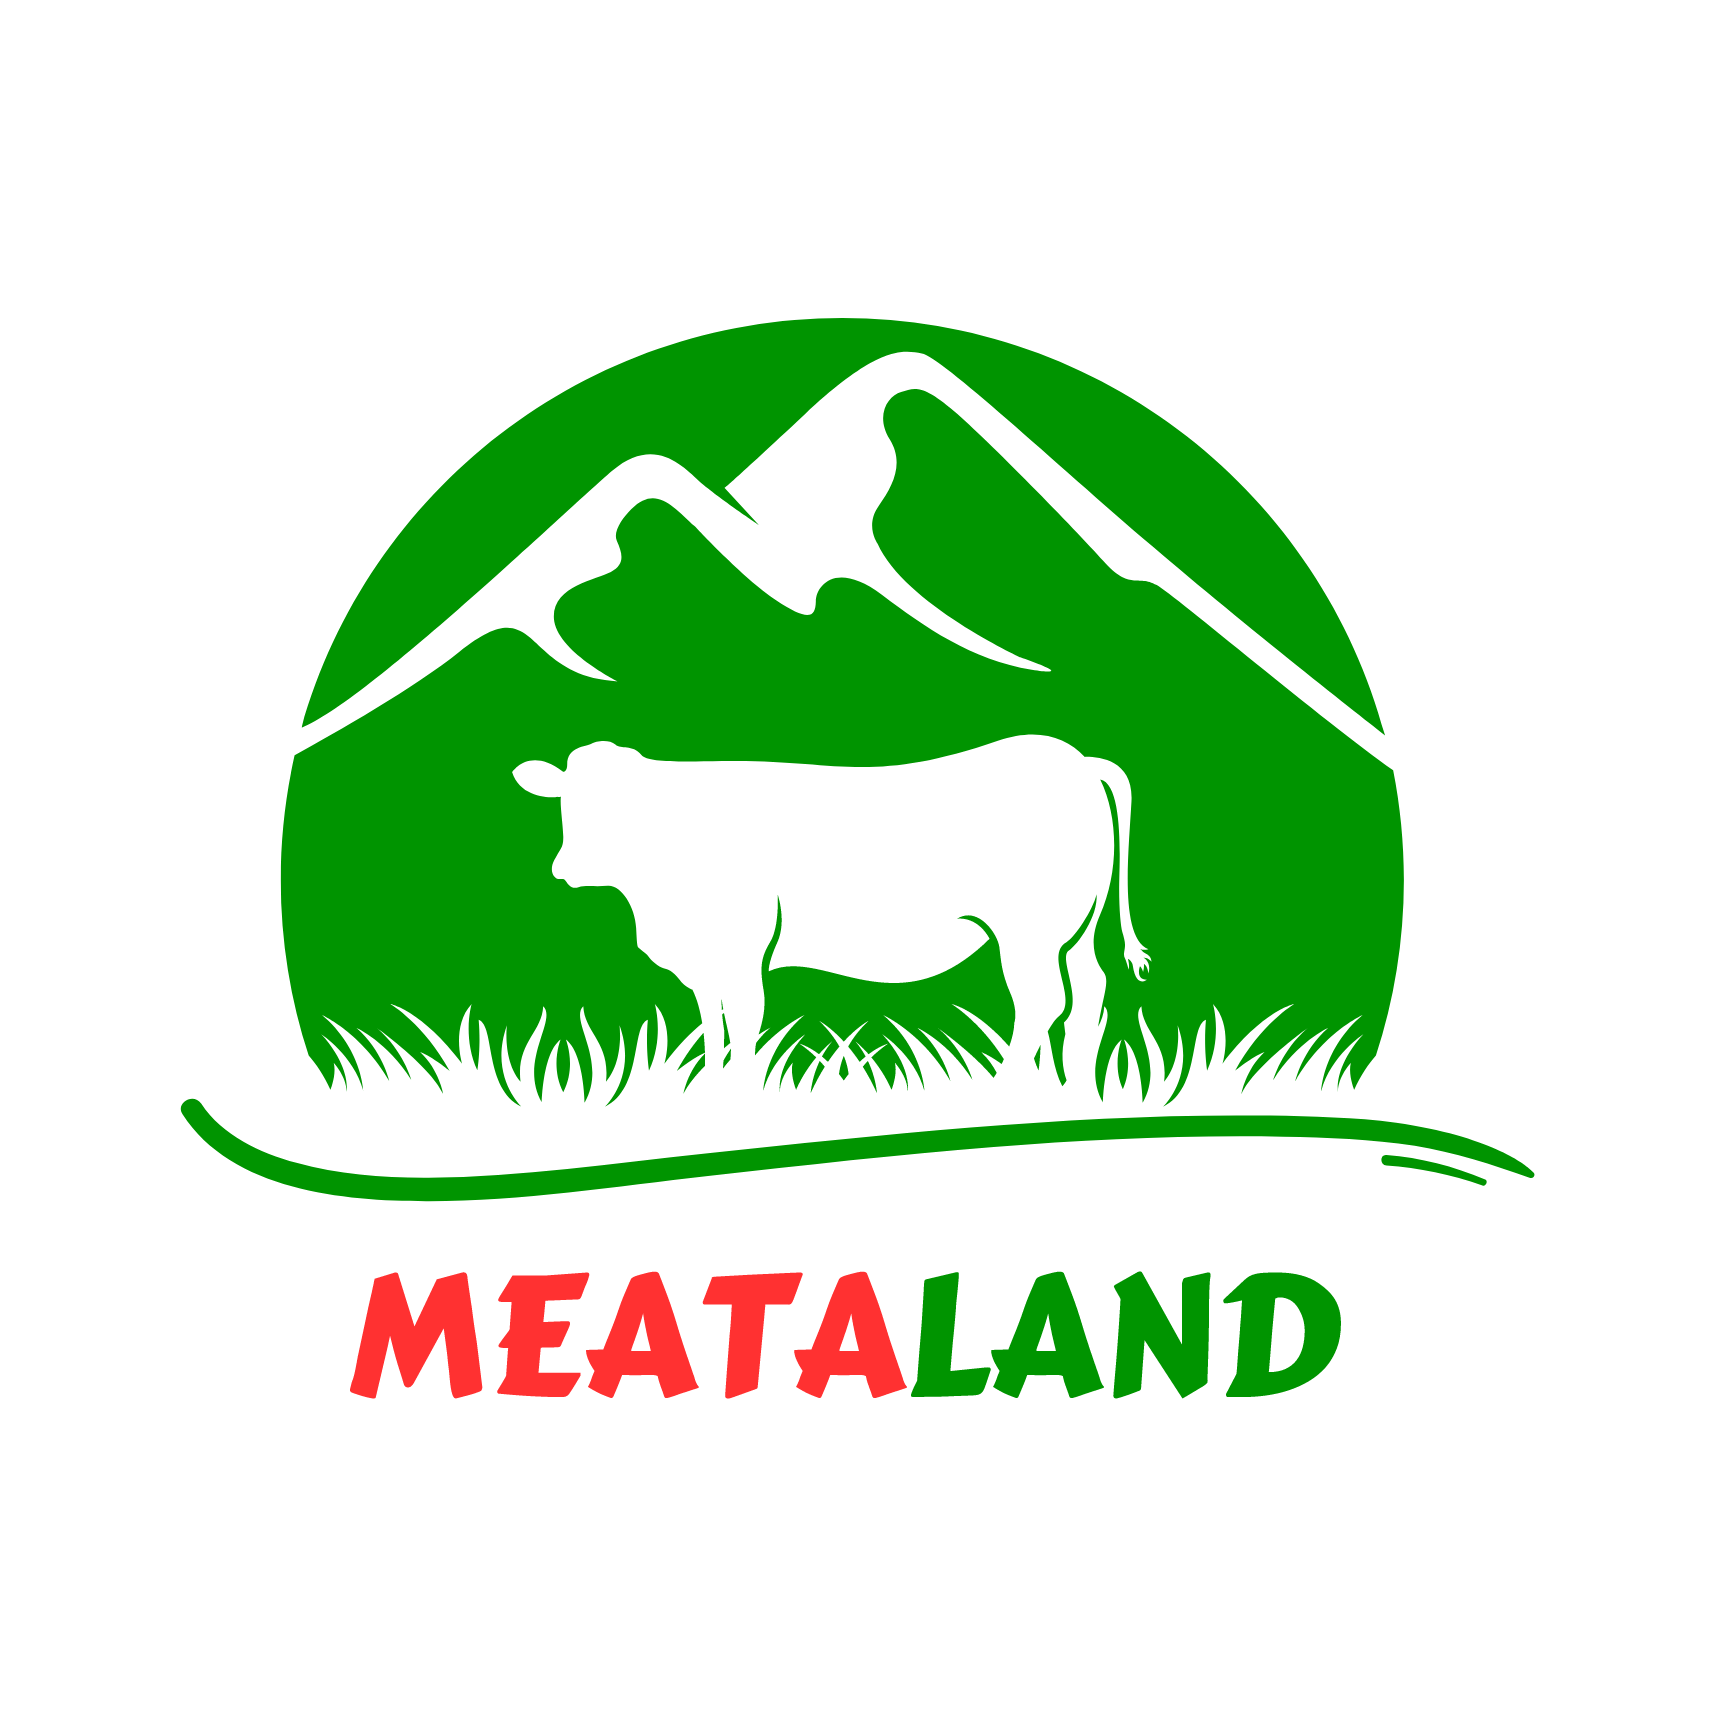 MeataLand